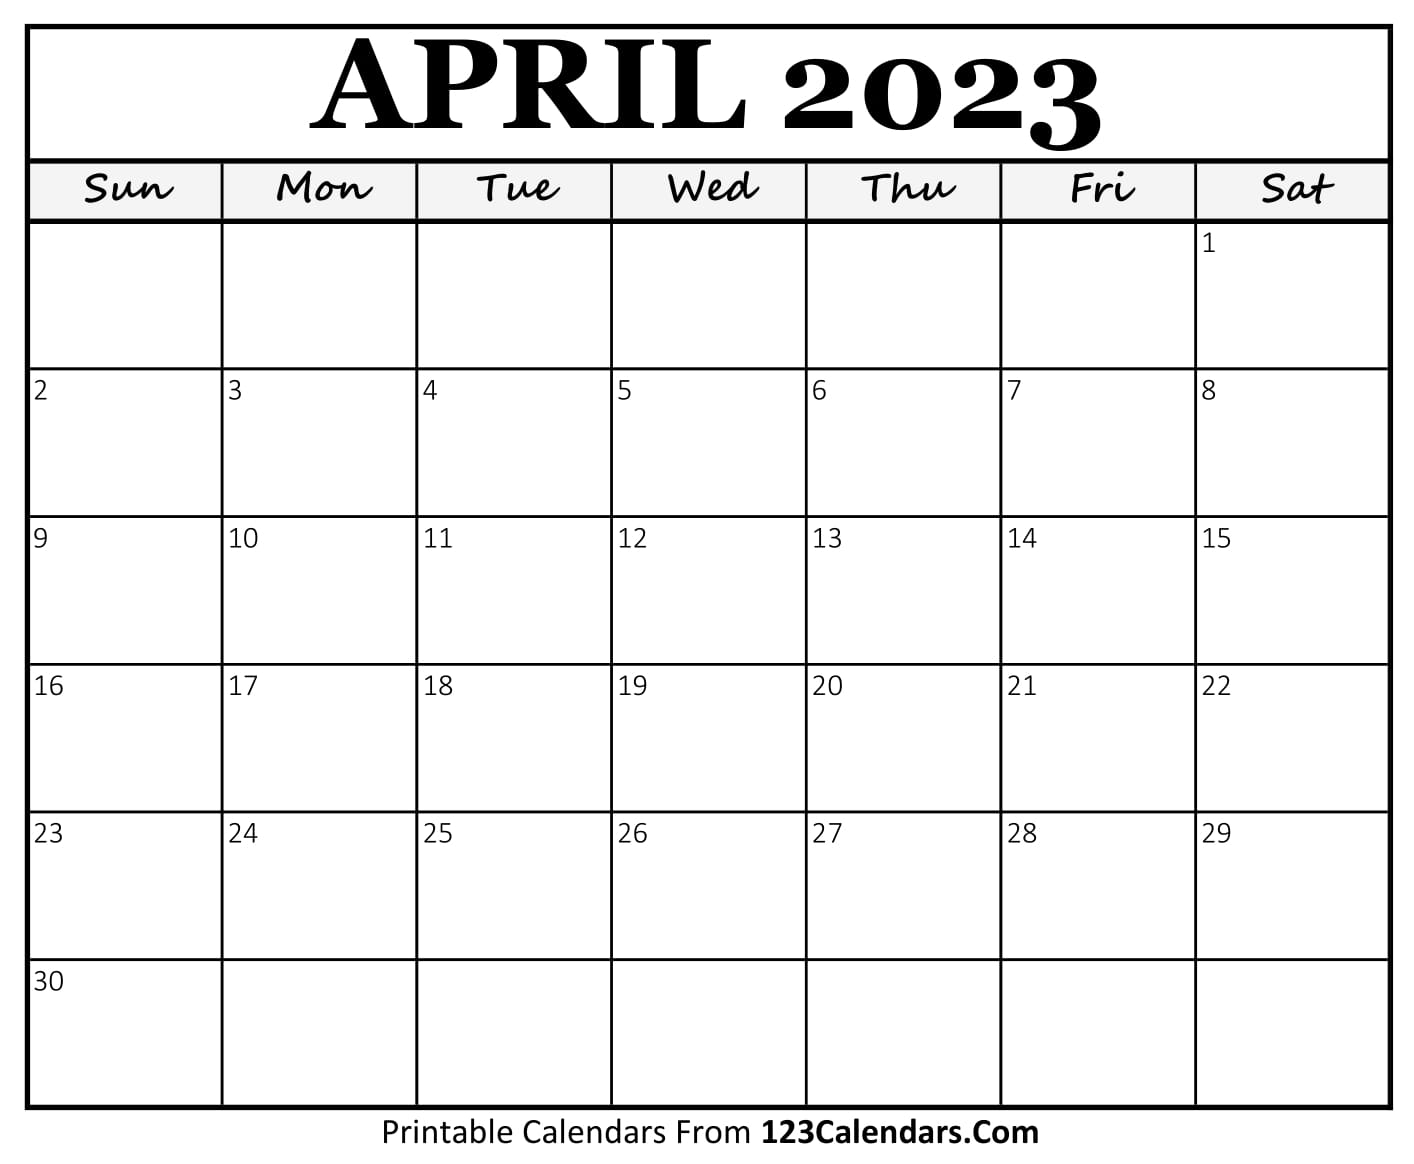 April 2023 Calendar Download - Get Calendar 2023 Update